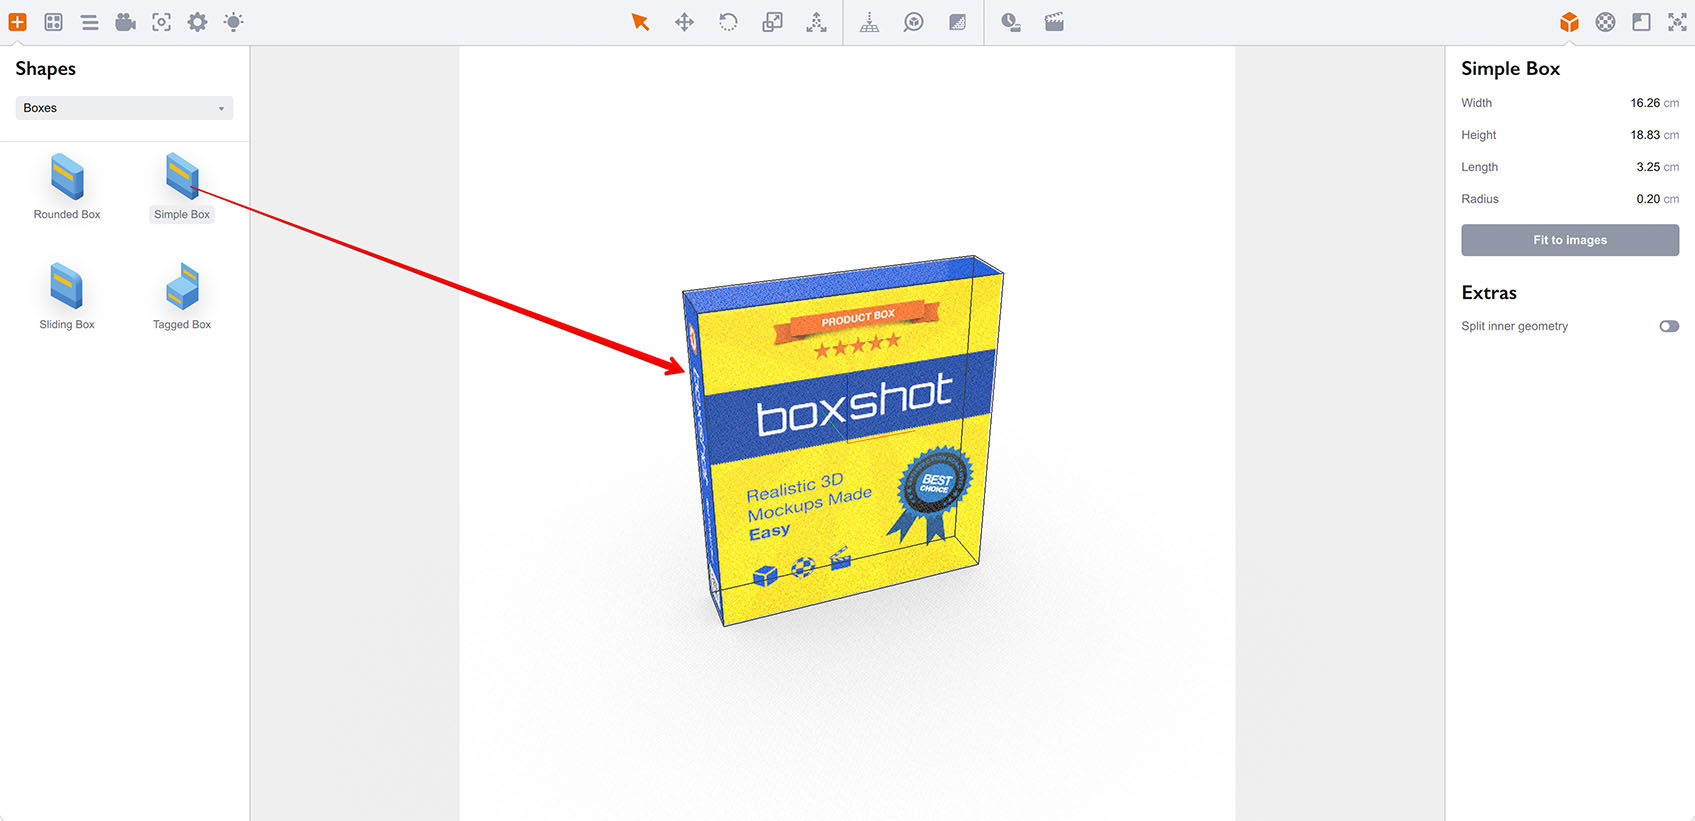 A box shape is added to Boxshot scene